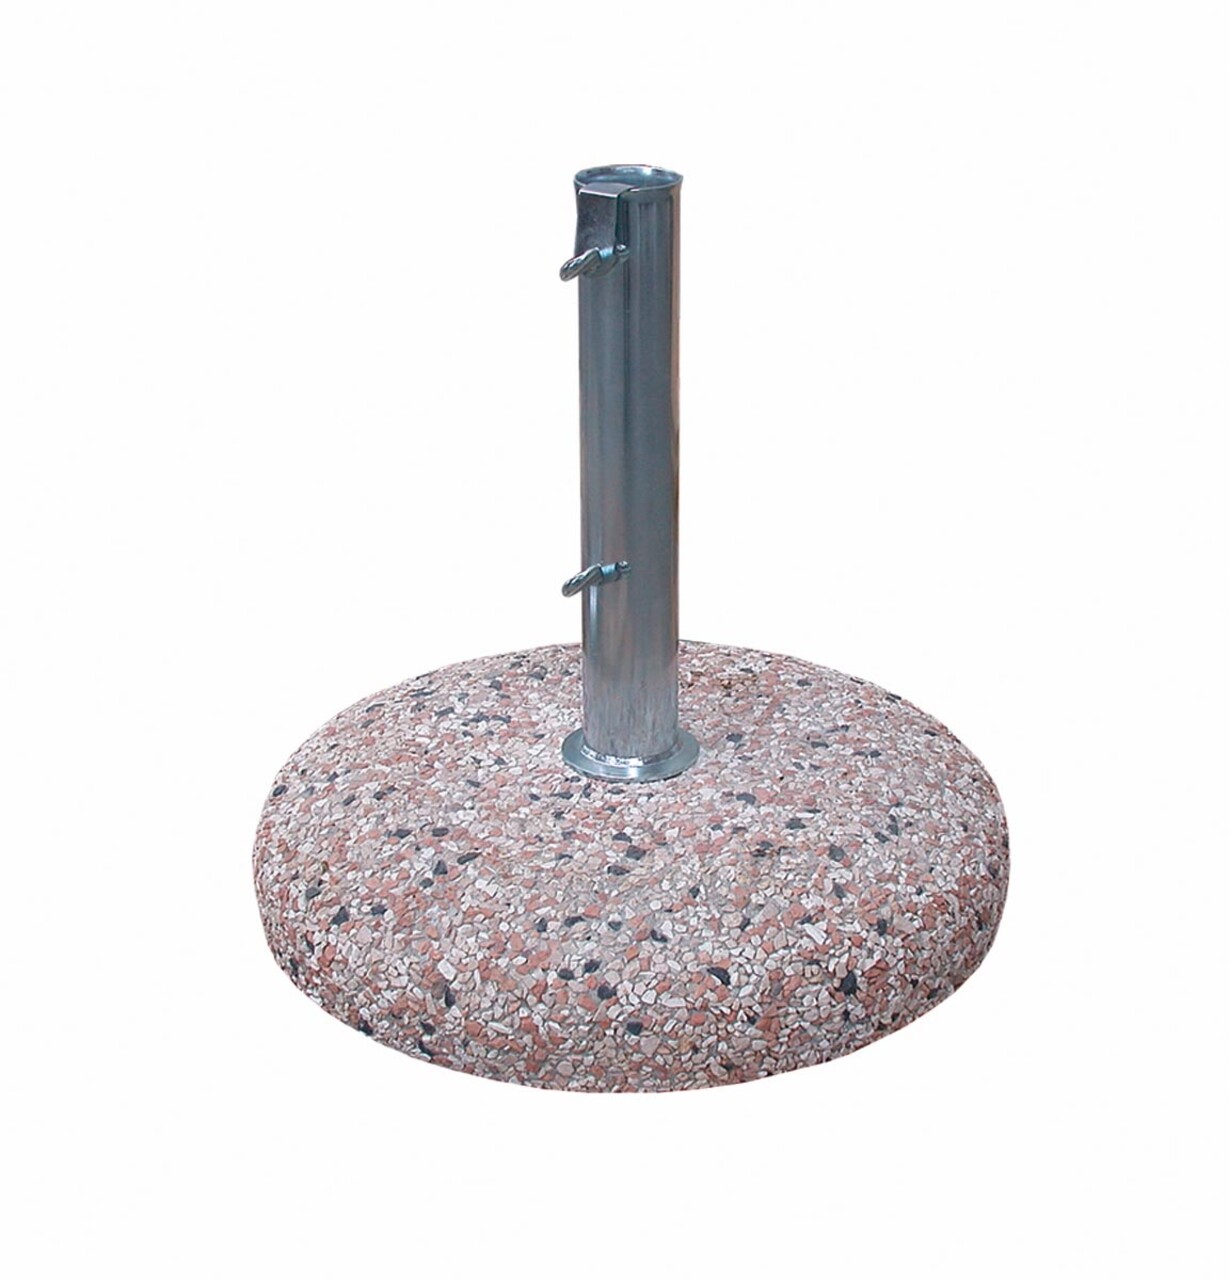 Barry Kerti napernyő alap, Bizzotto, 25 kg, Ø 45 cm, stalp Ø 40 mm, cement